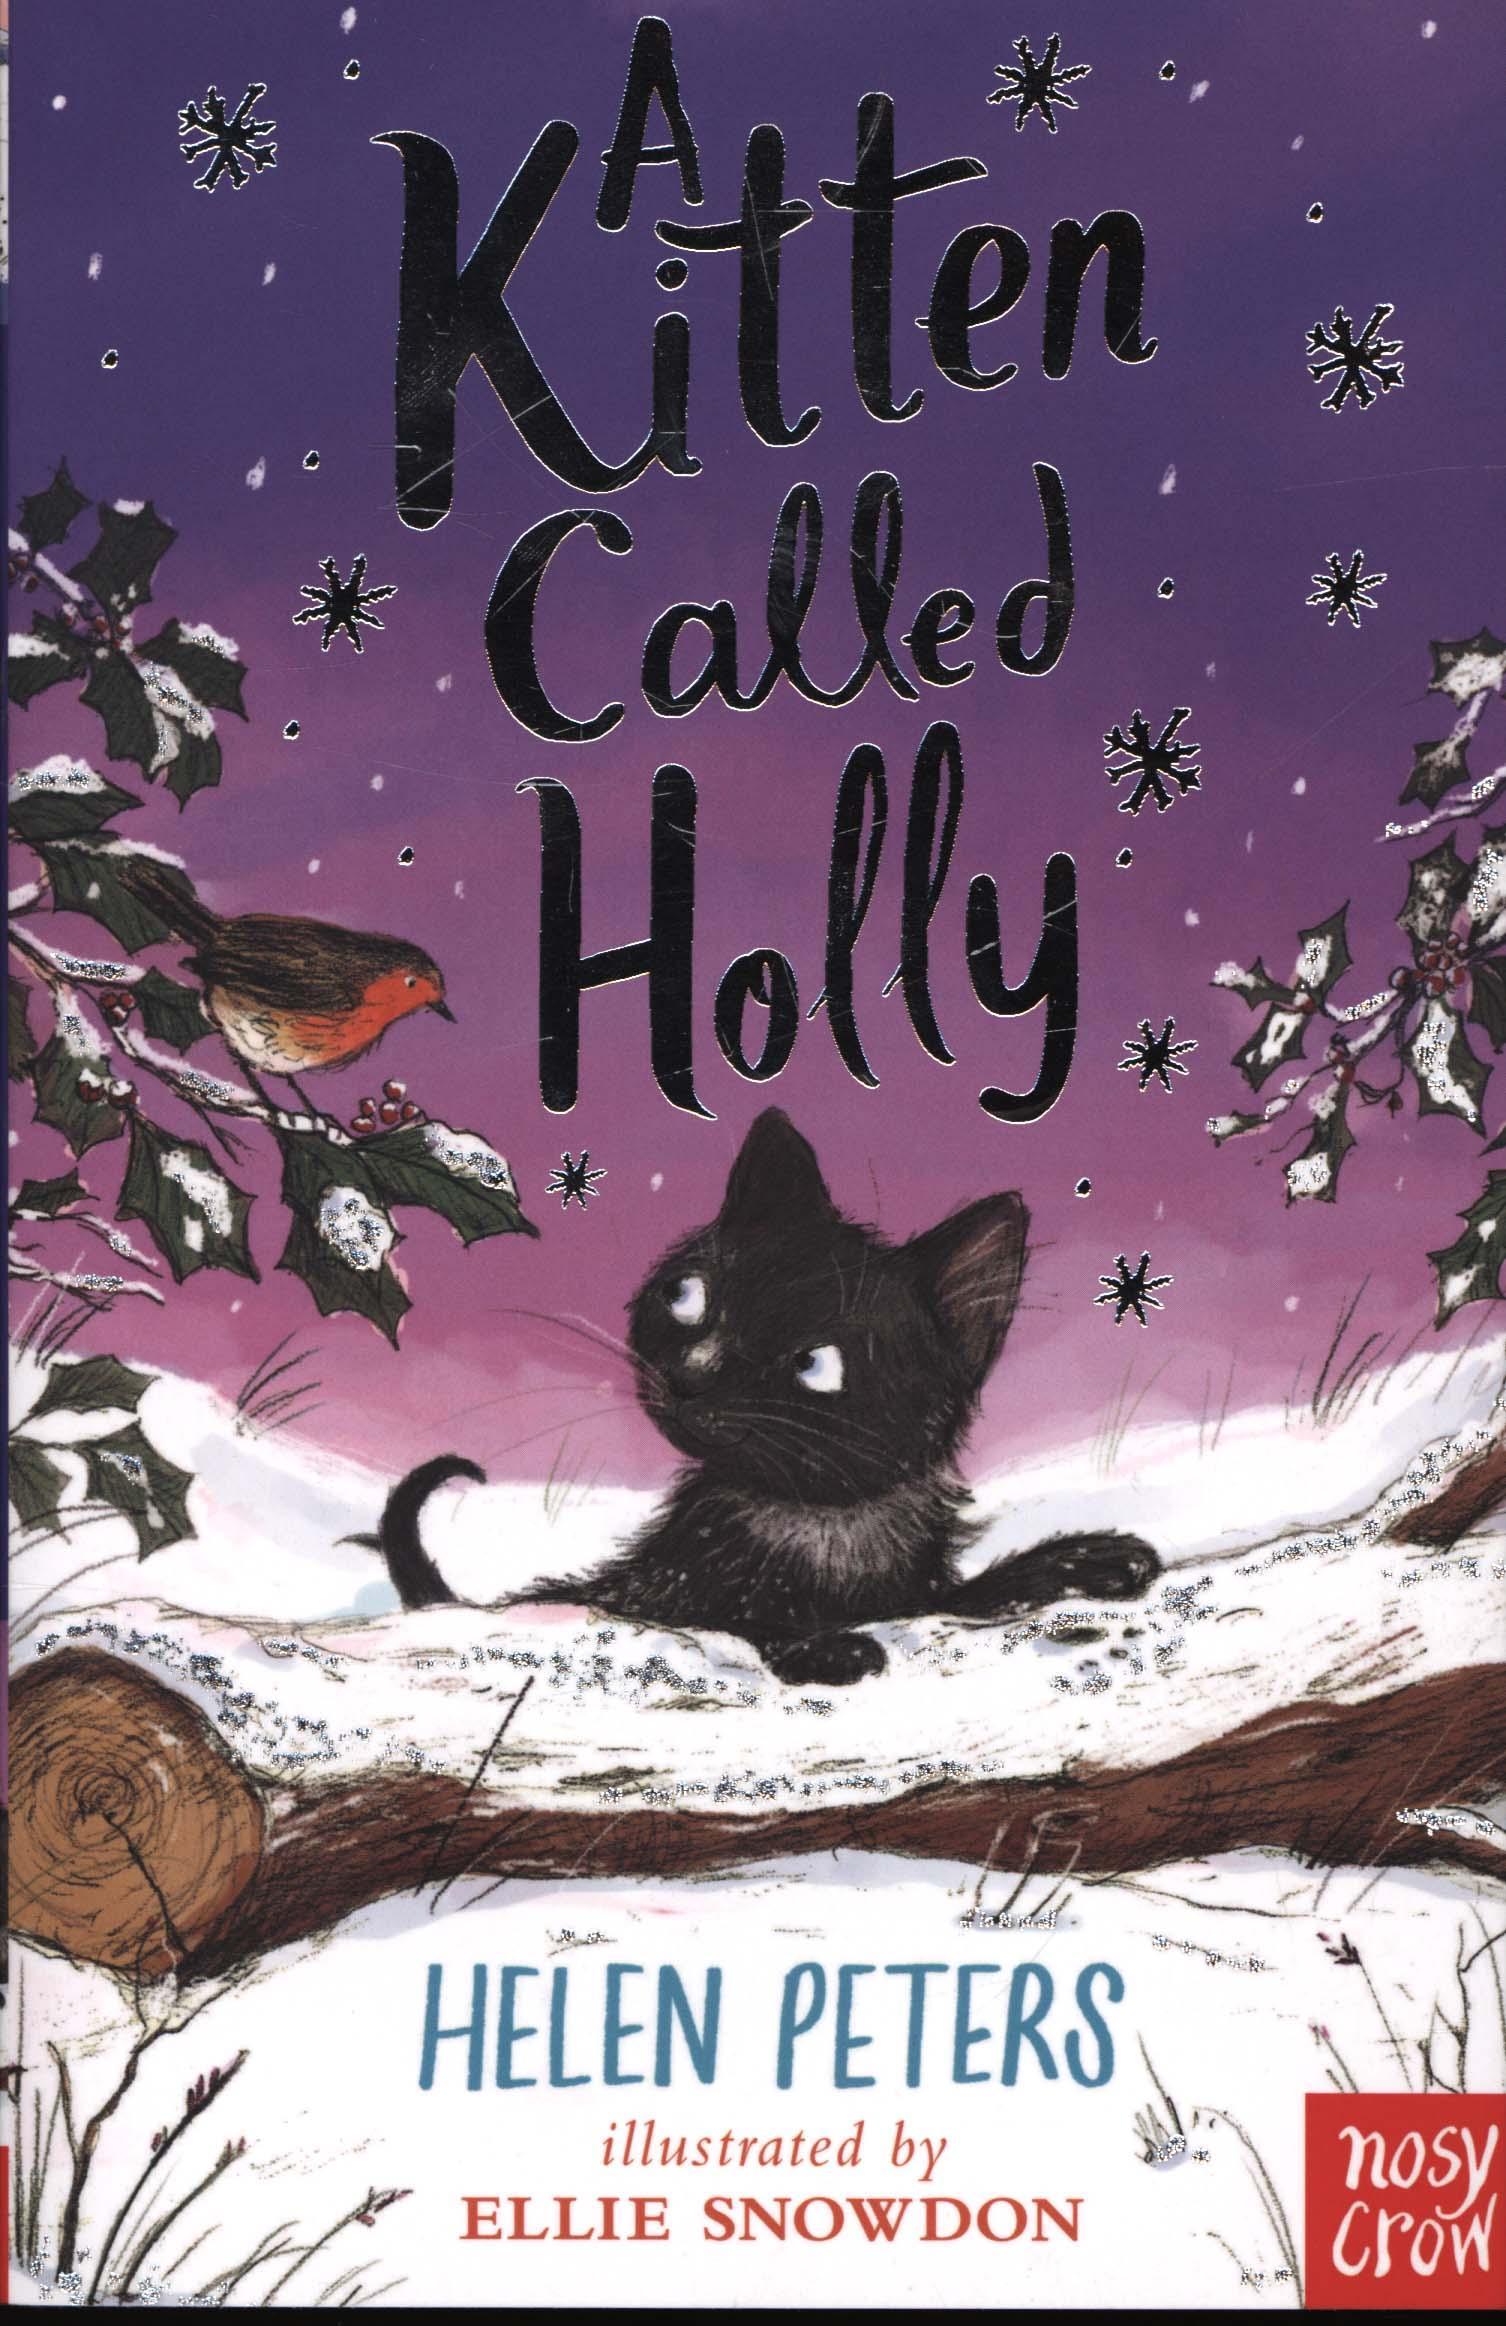 Kitten Called Holly